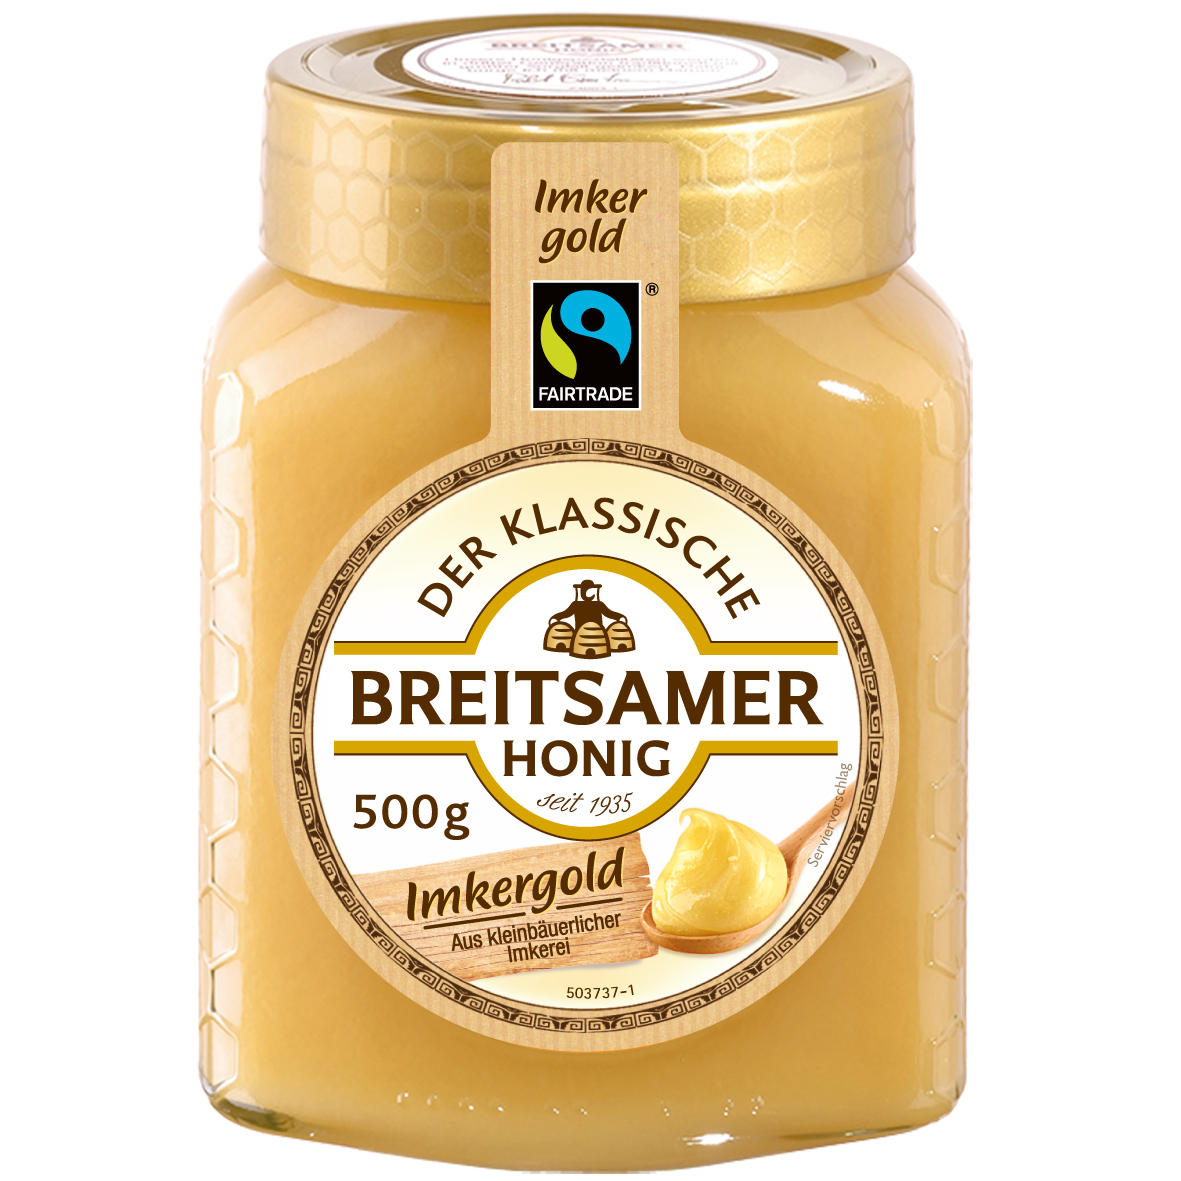 Breitsamer Imkergold Honig, cremig-